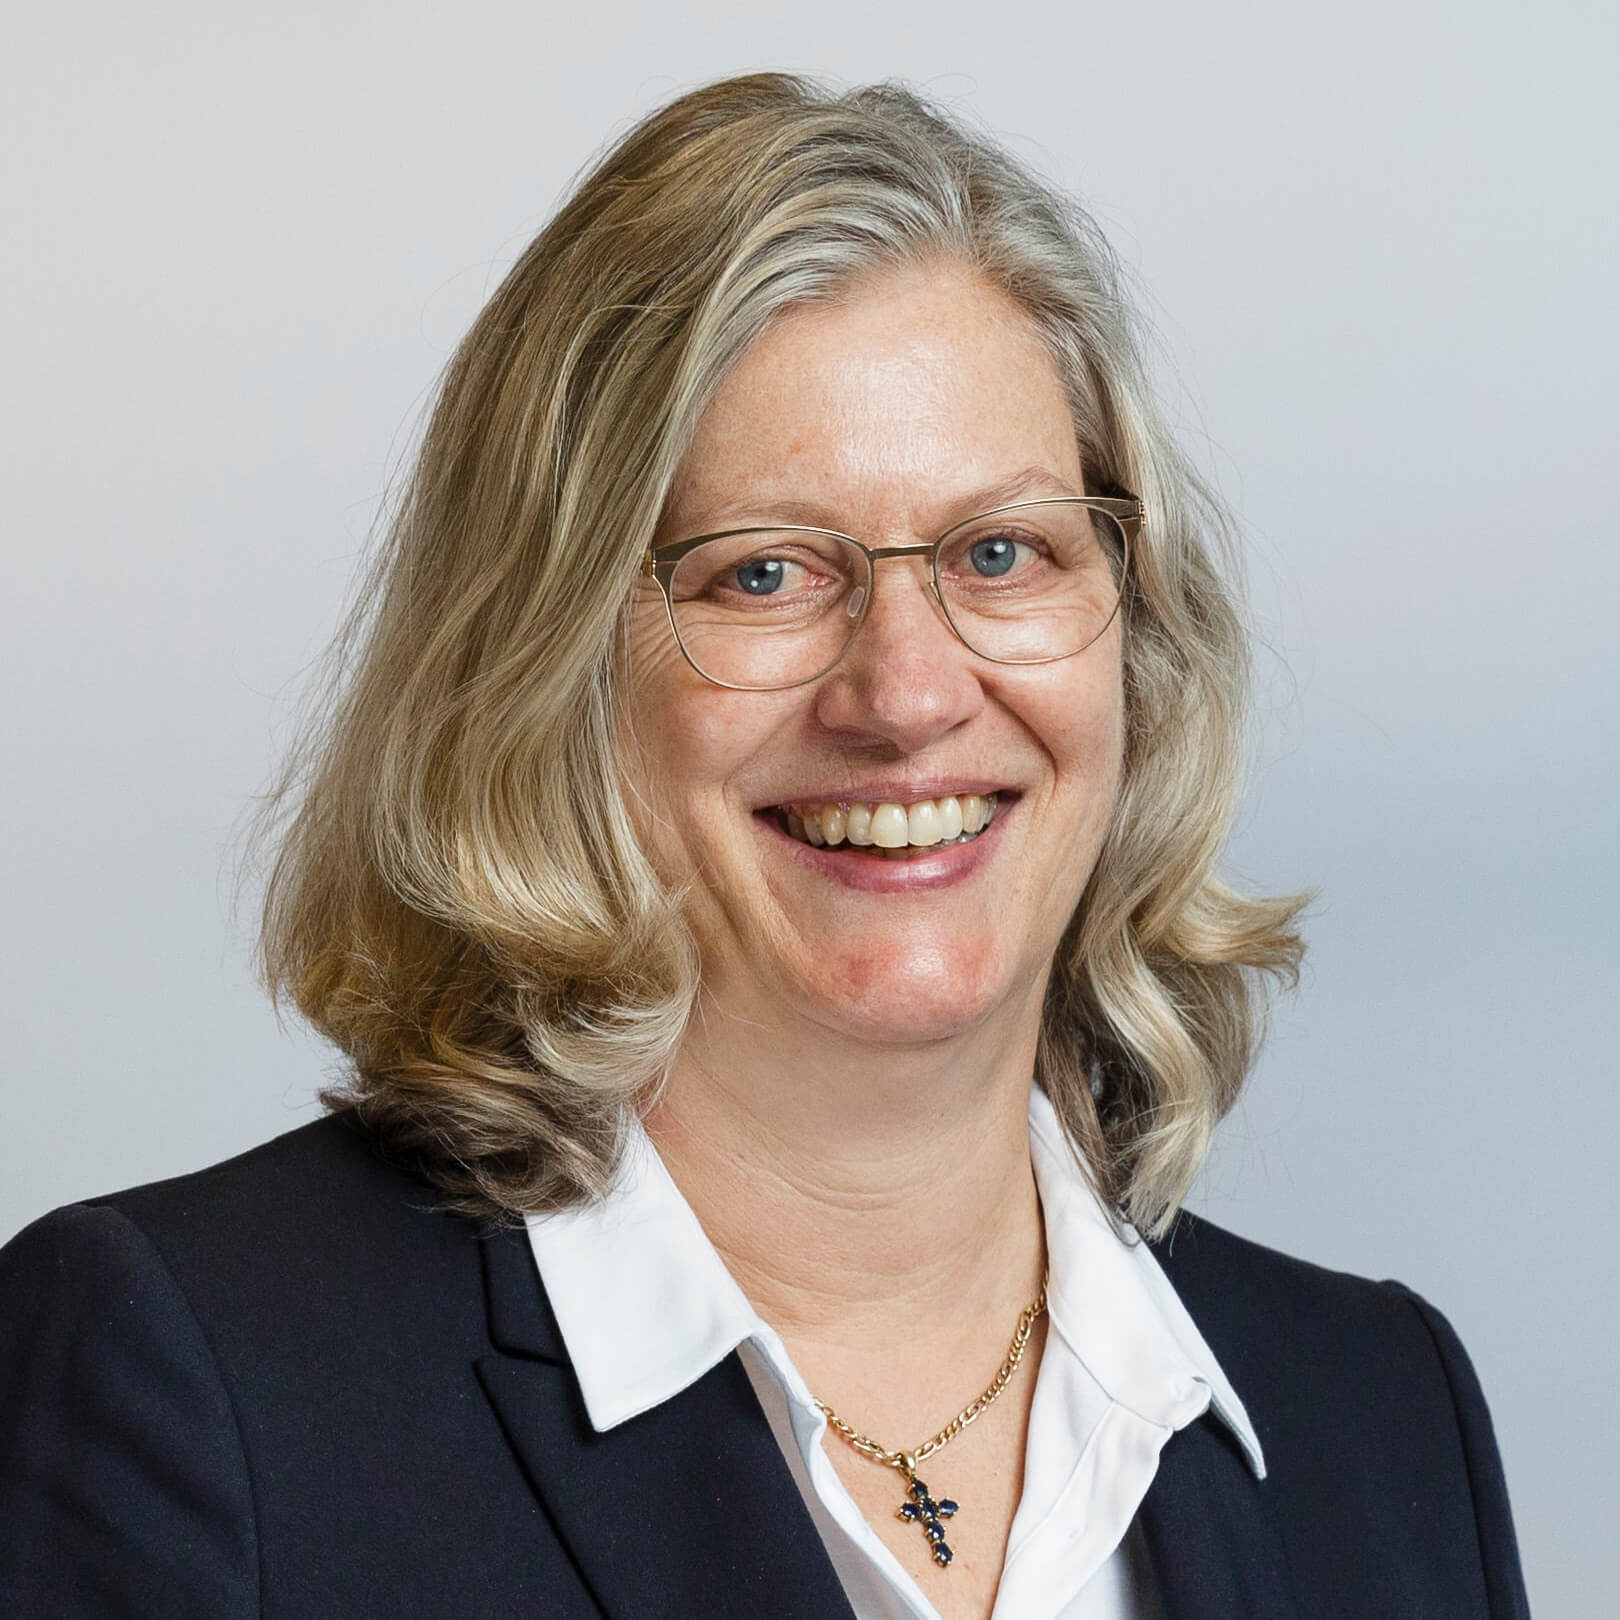 Dr. Dorothea Reichert